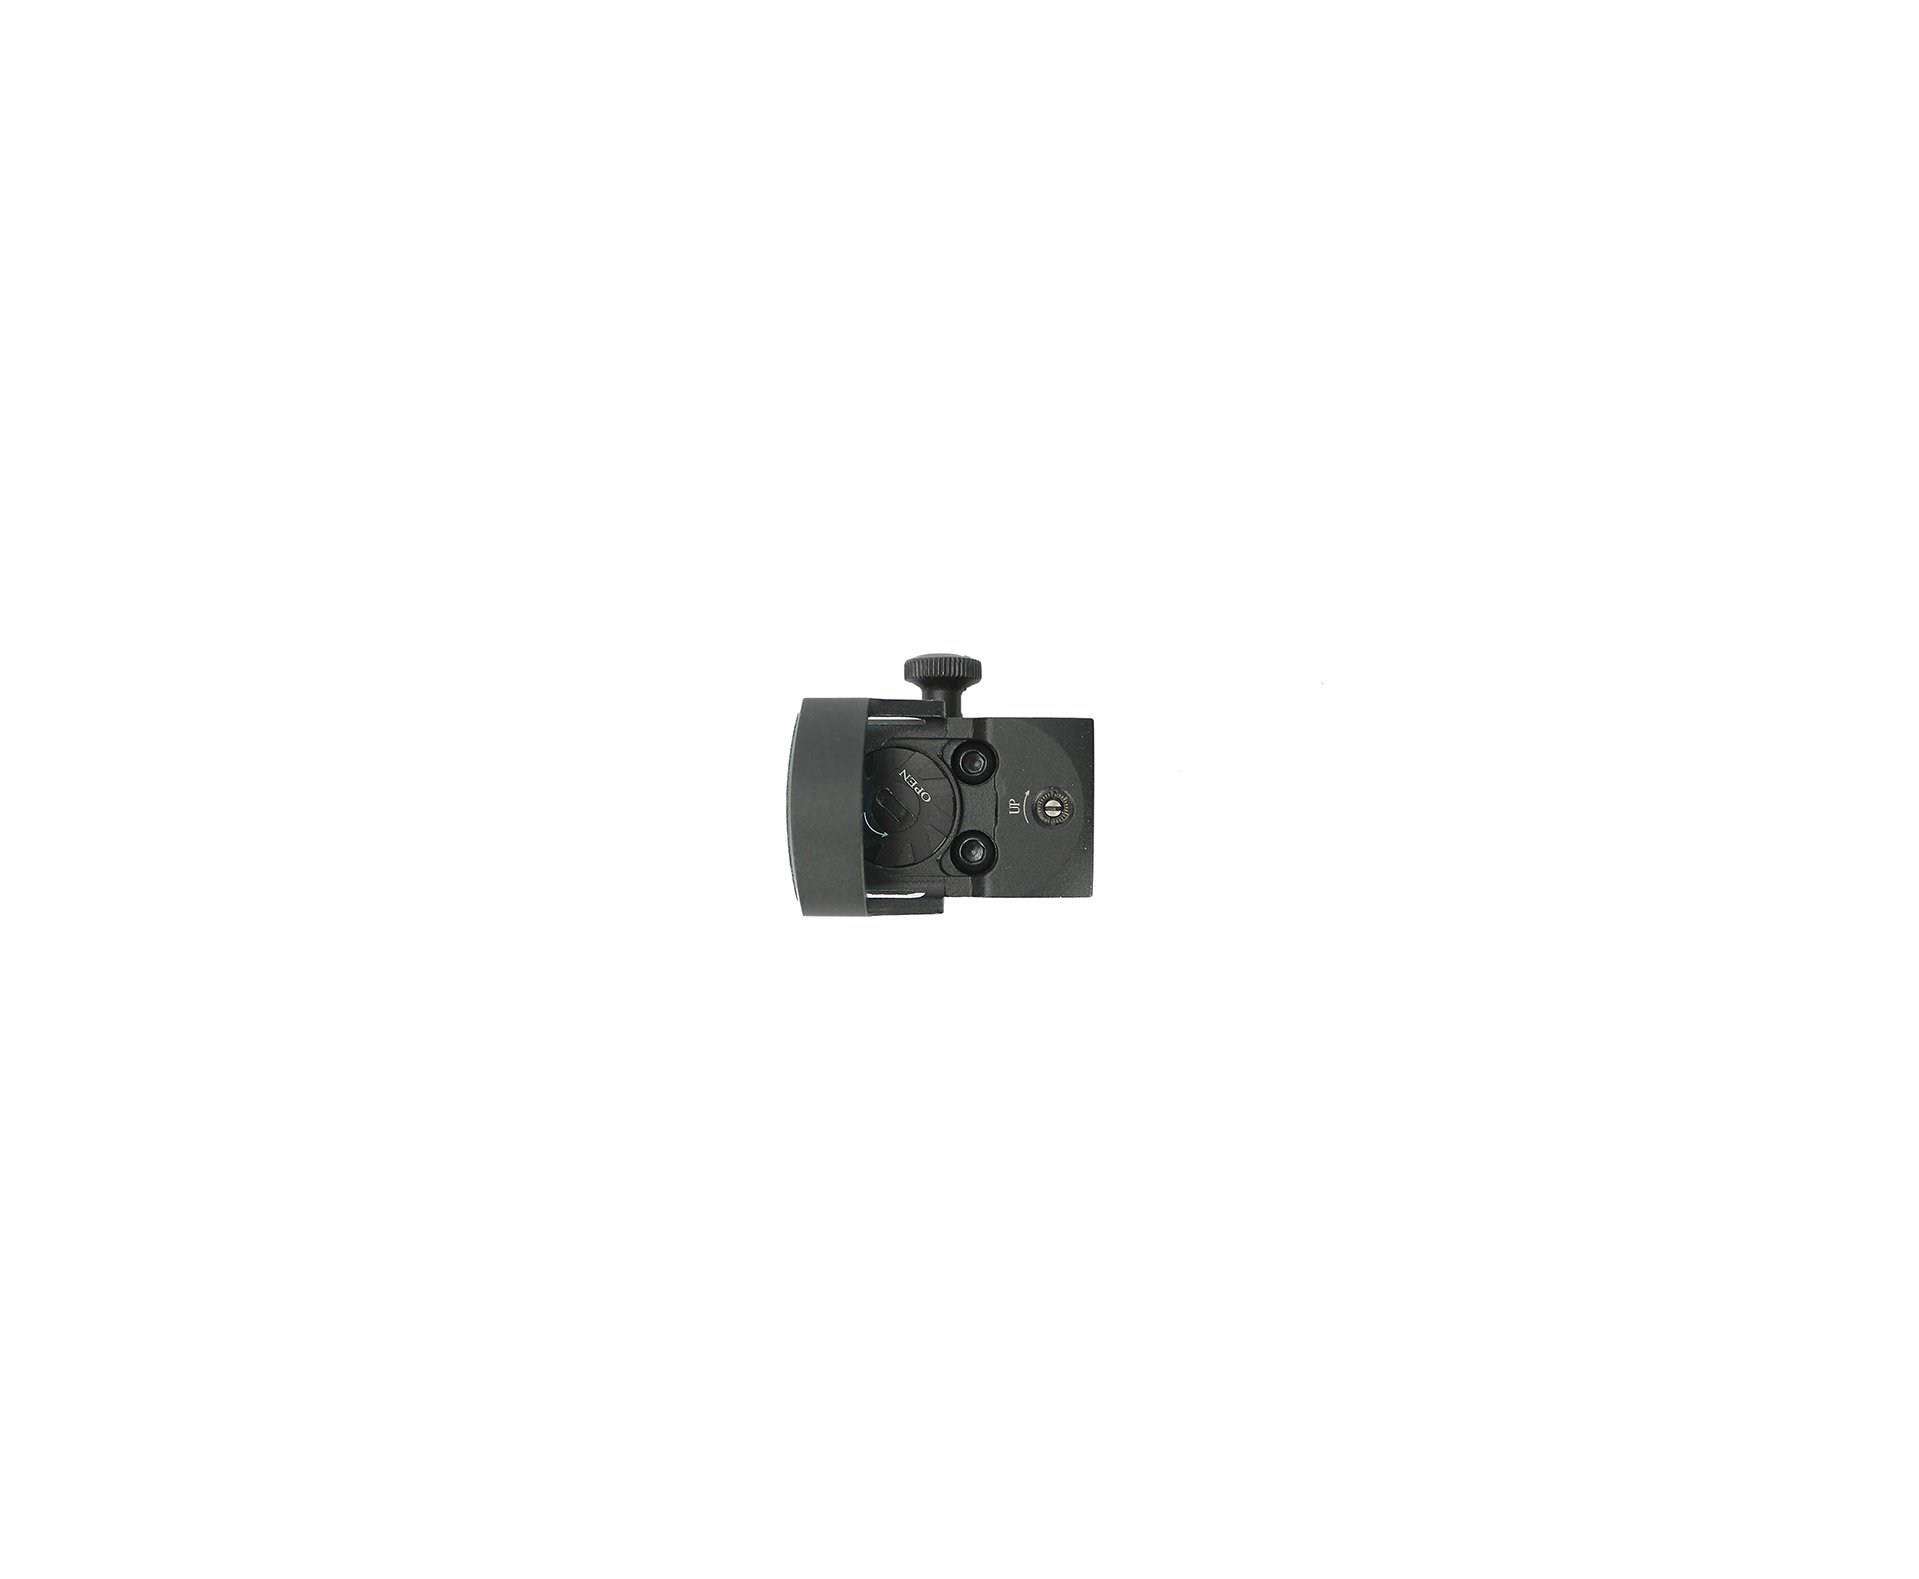 Red Dot Microdot Para Arma De Fogo Mount 22mm 1x17x28mm 4 Moa Erd3013 Evo Tactical